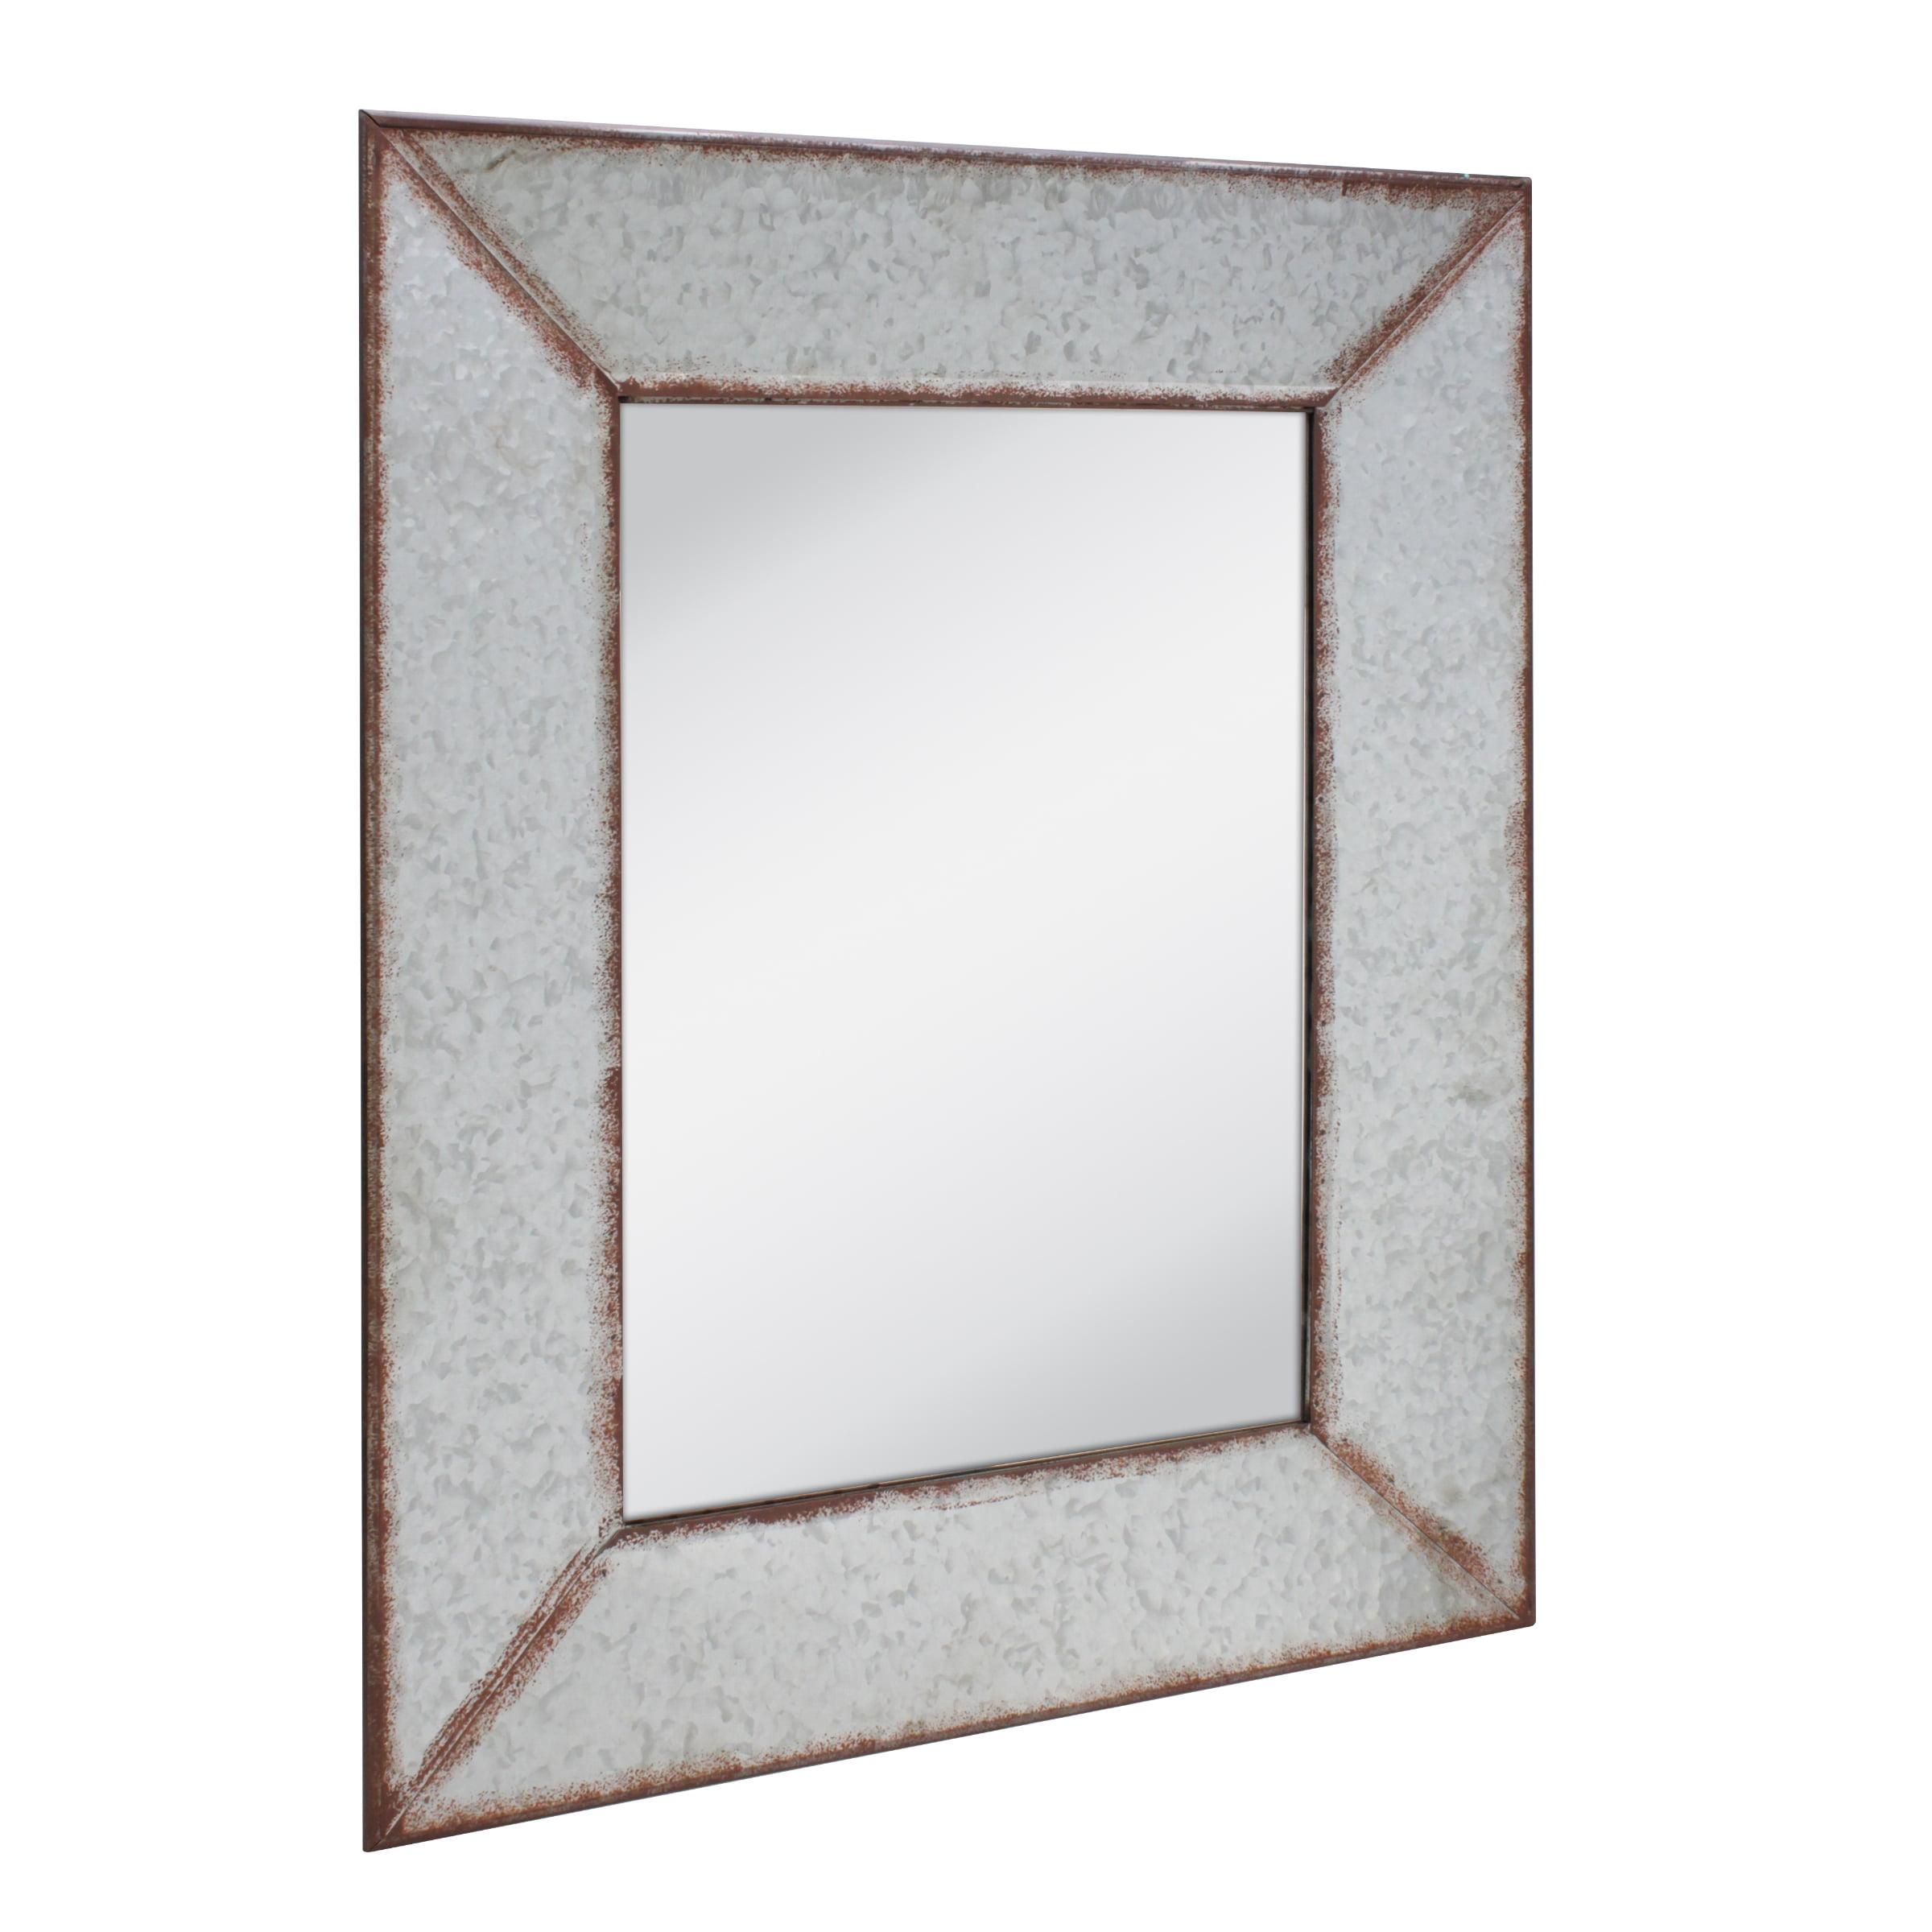 Rustic Rectangular Galvanized Metal Wall Mirror, 31.5" x 25.2"